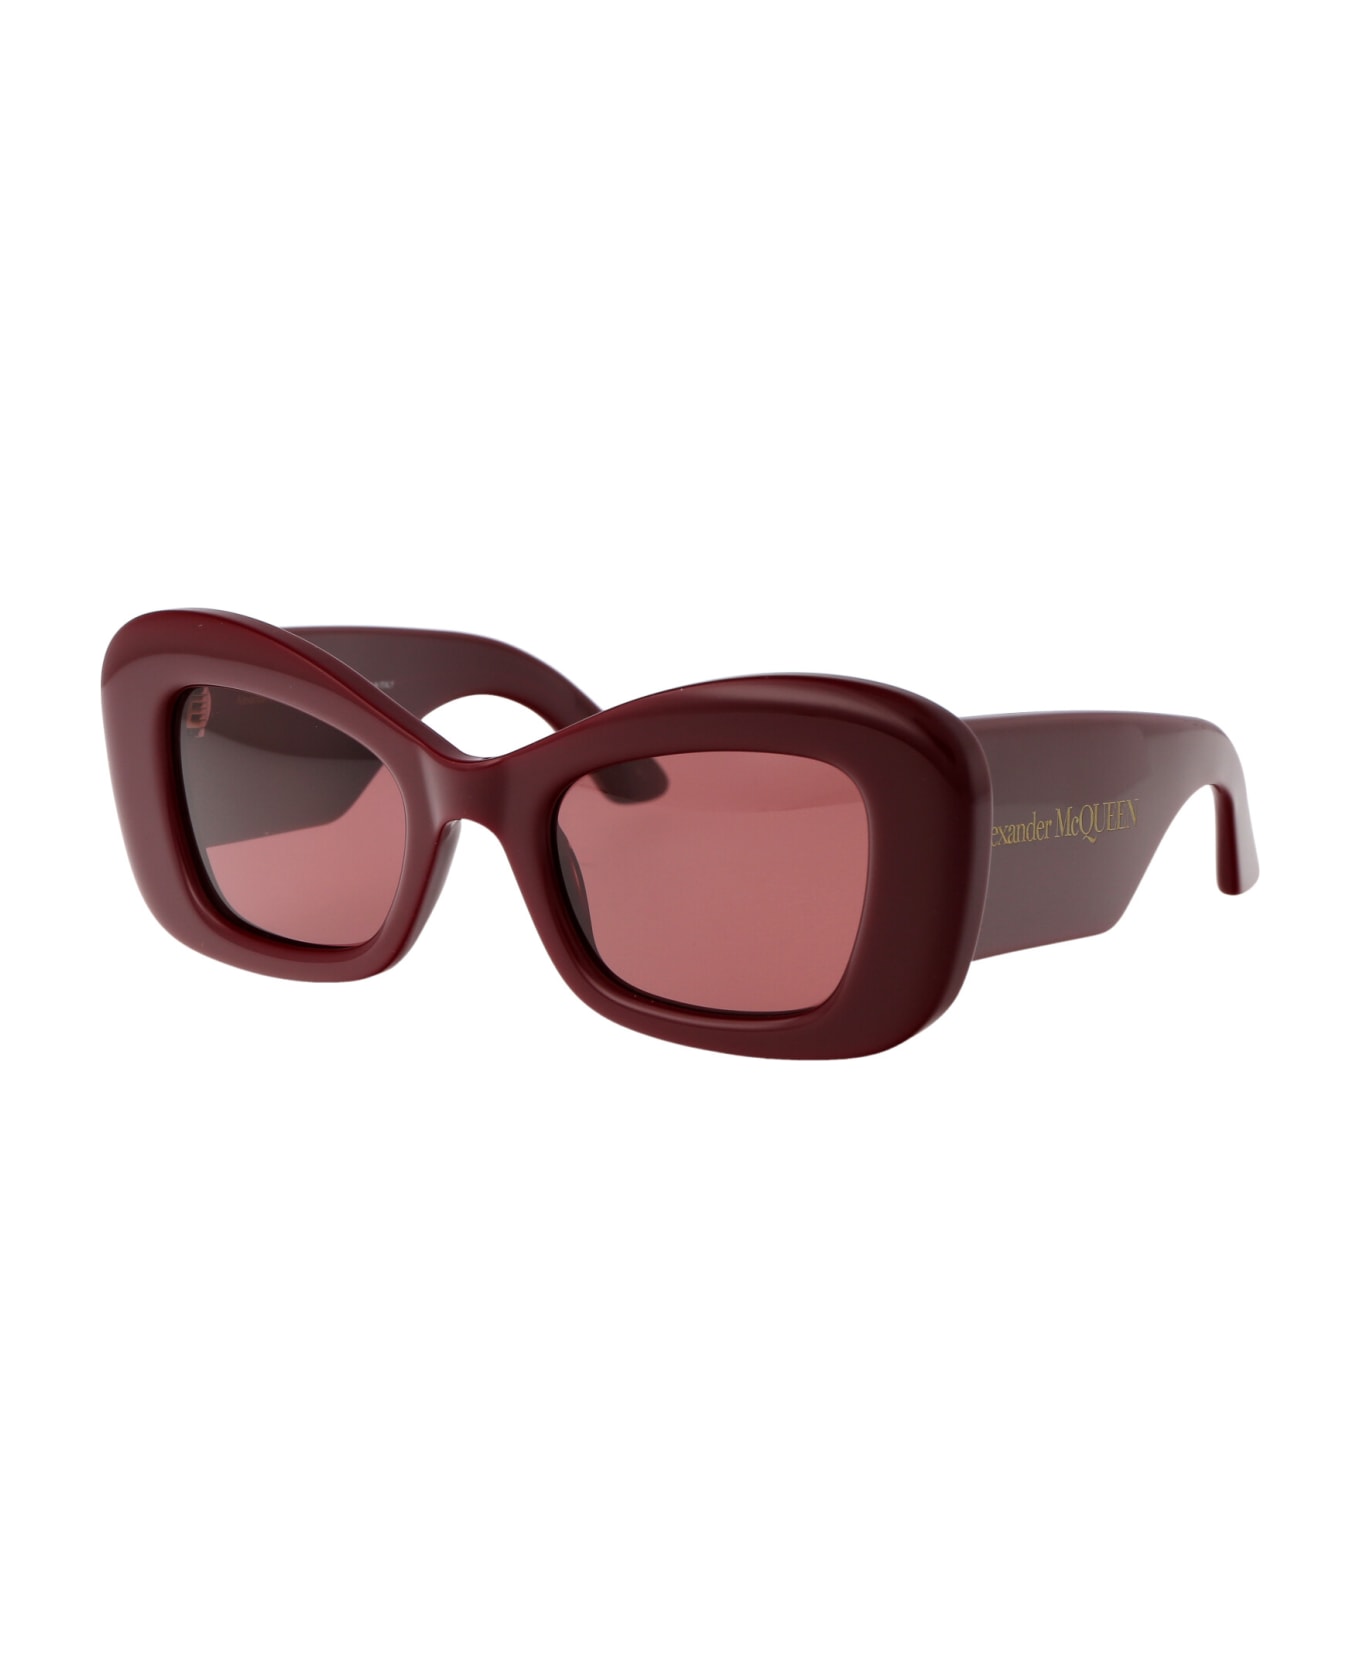 Alexander McQueen Eyewear Am0434s Sunglasses - 006 BURGUNDY BURGUNDY RED